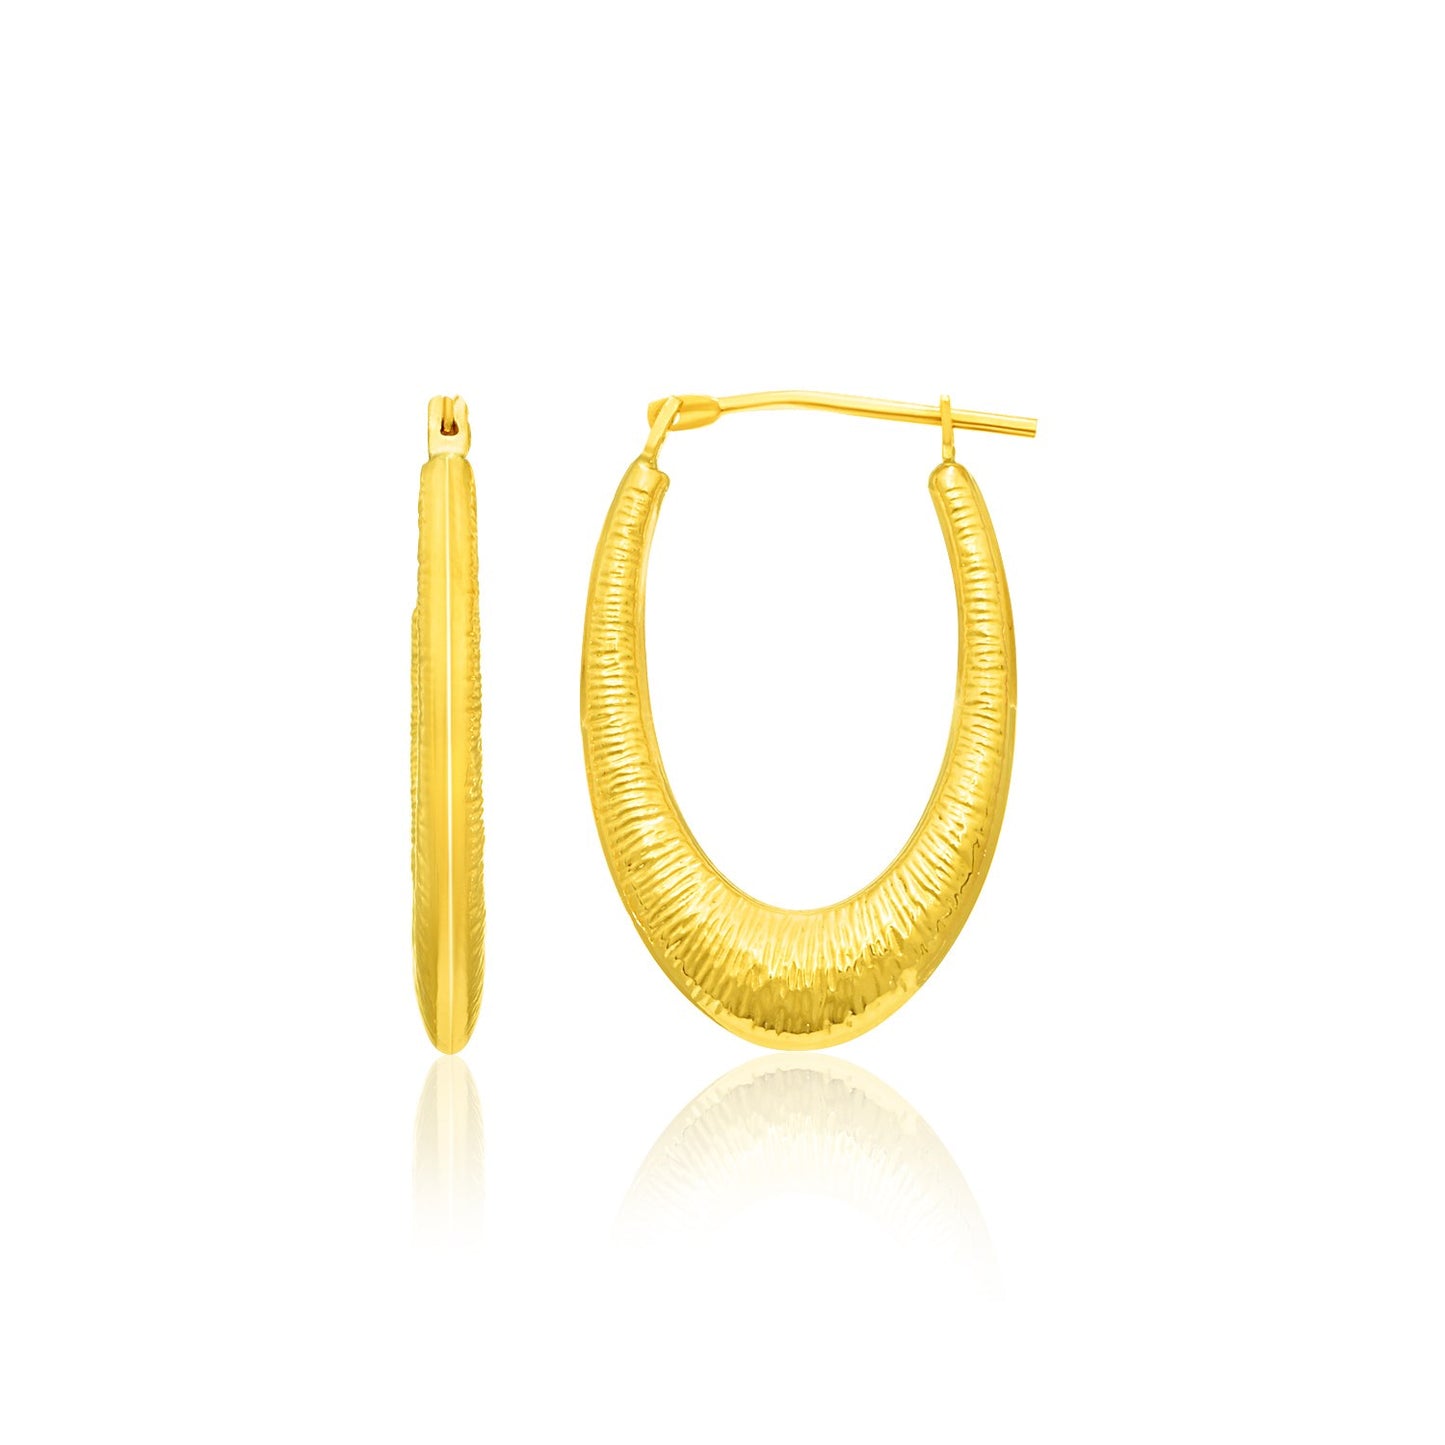 Hoop Earrings in a Graduated Texture Style